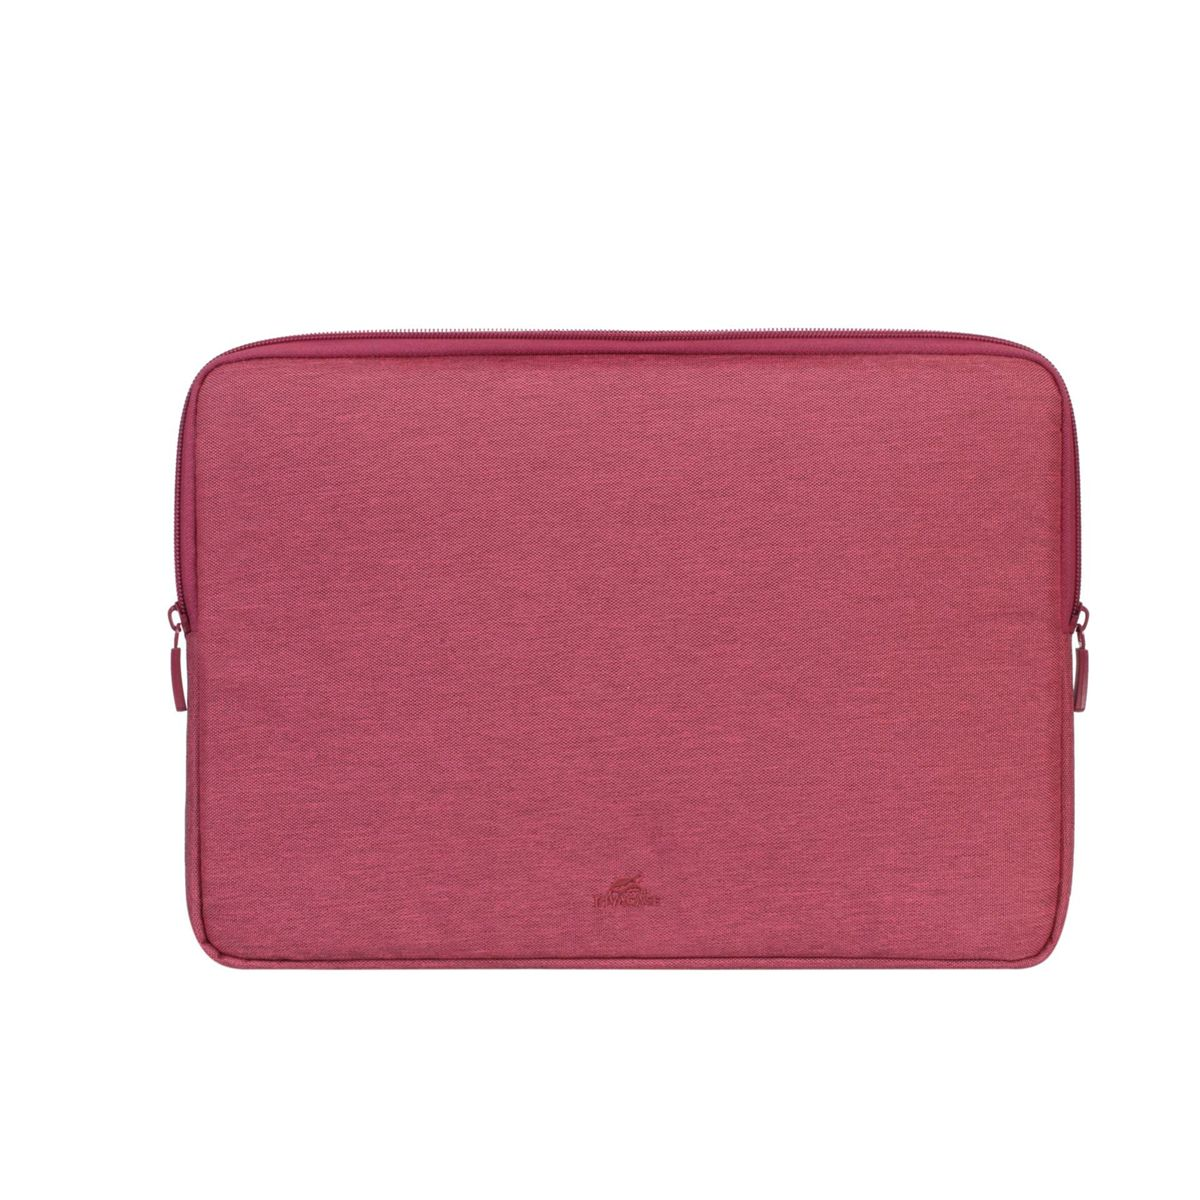 RIVACASE 7703 RED LAPTOP SLEEVE Rot Universal 13.3 Notebooktasche für Sleeve Polyester